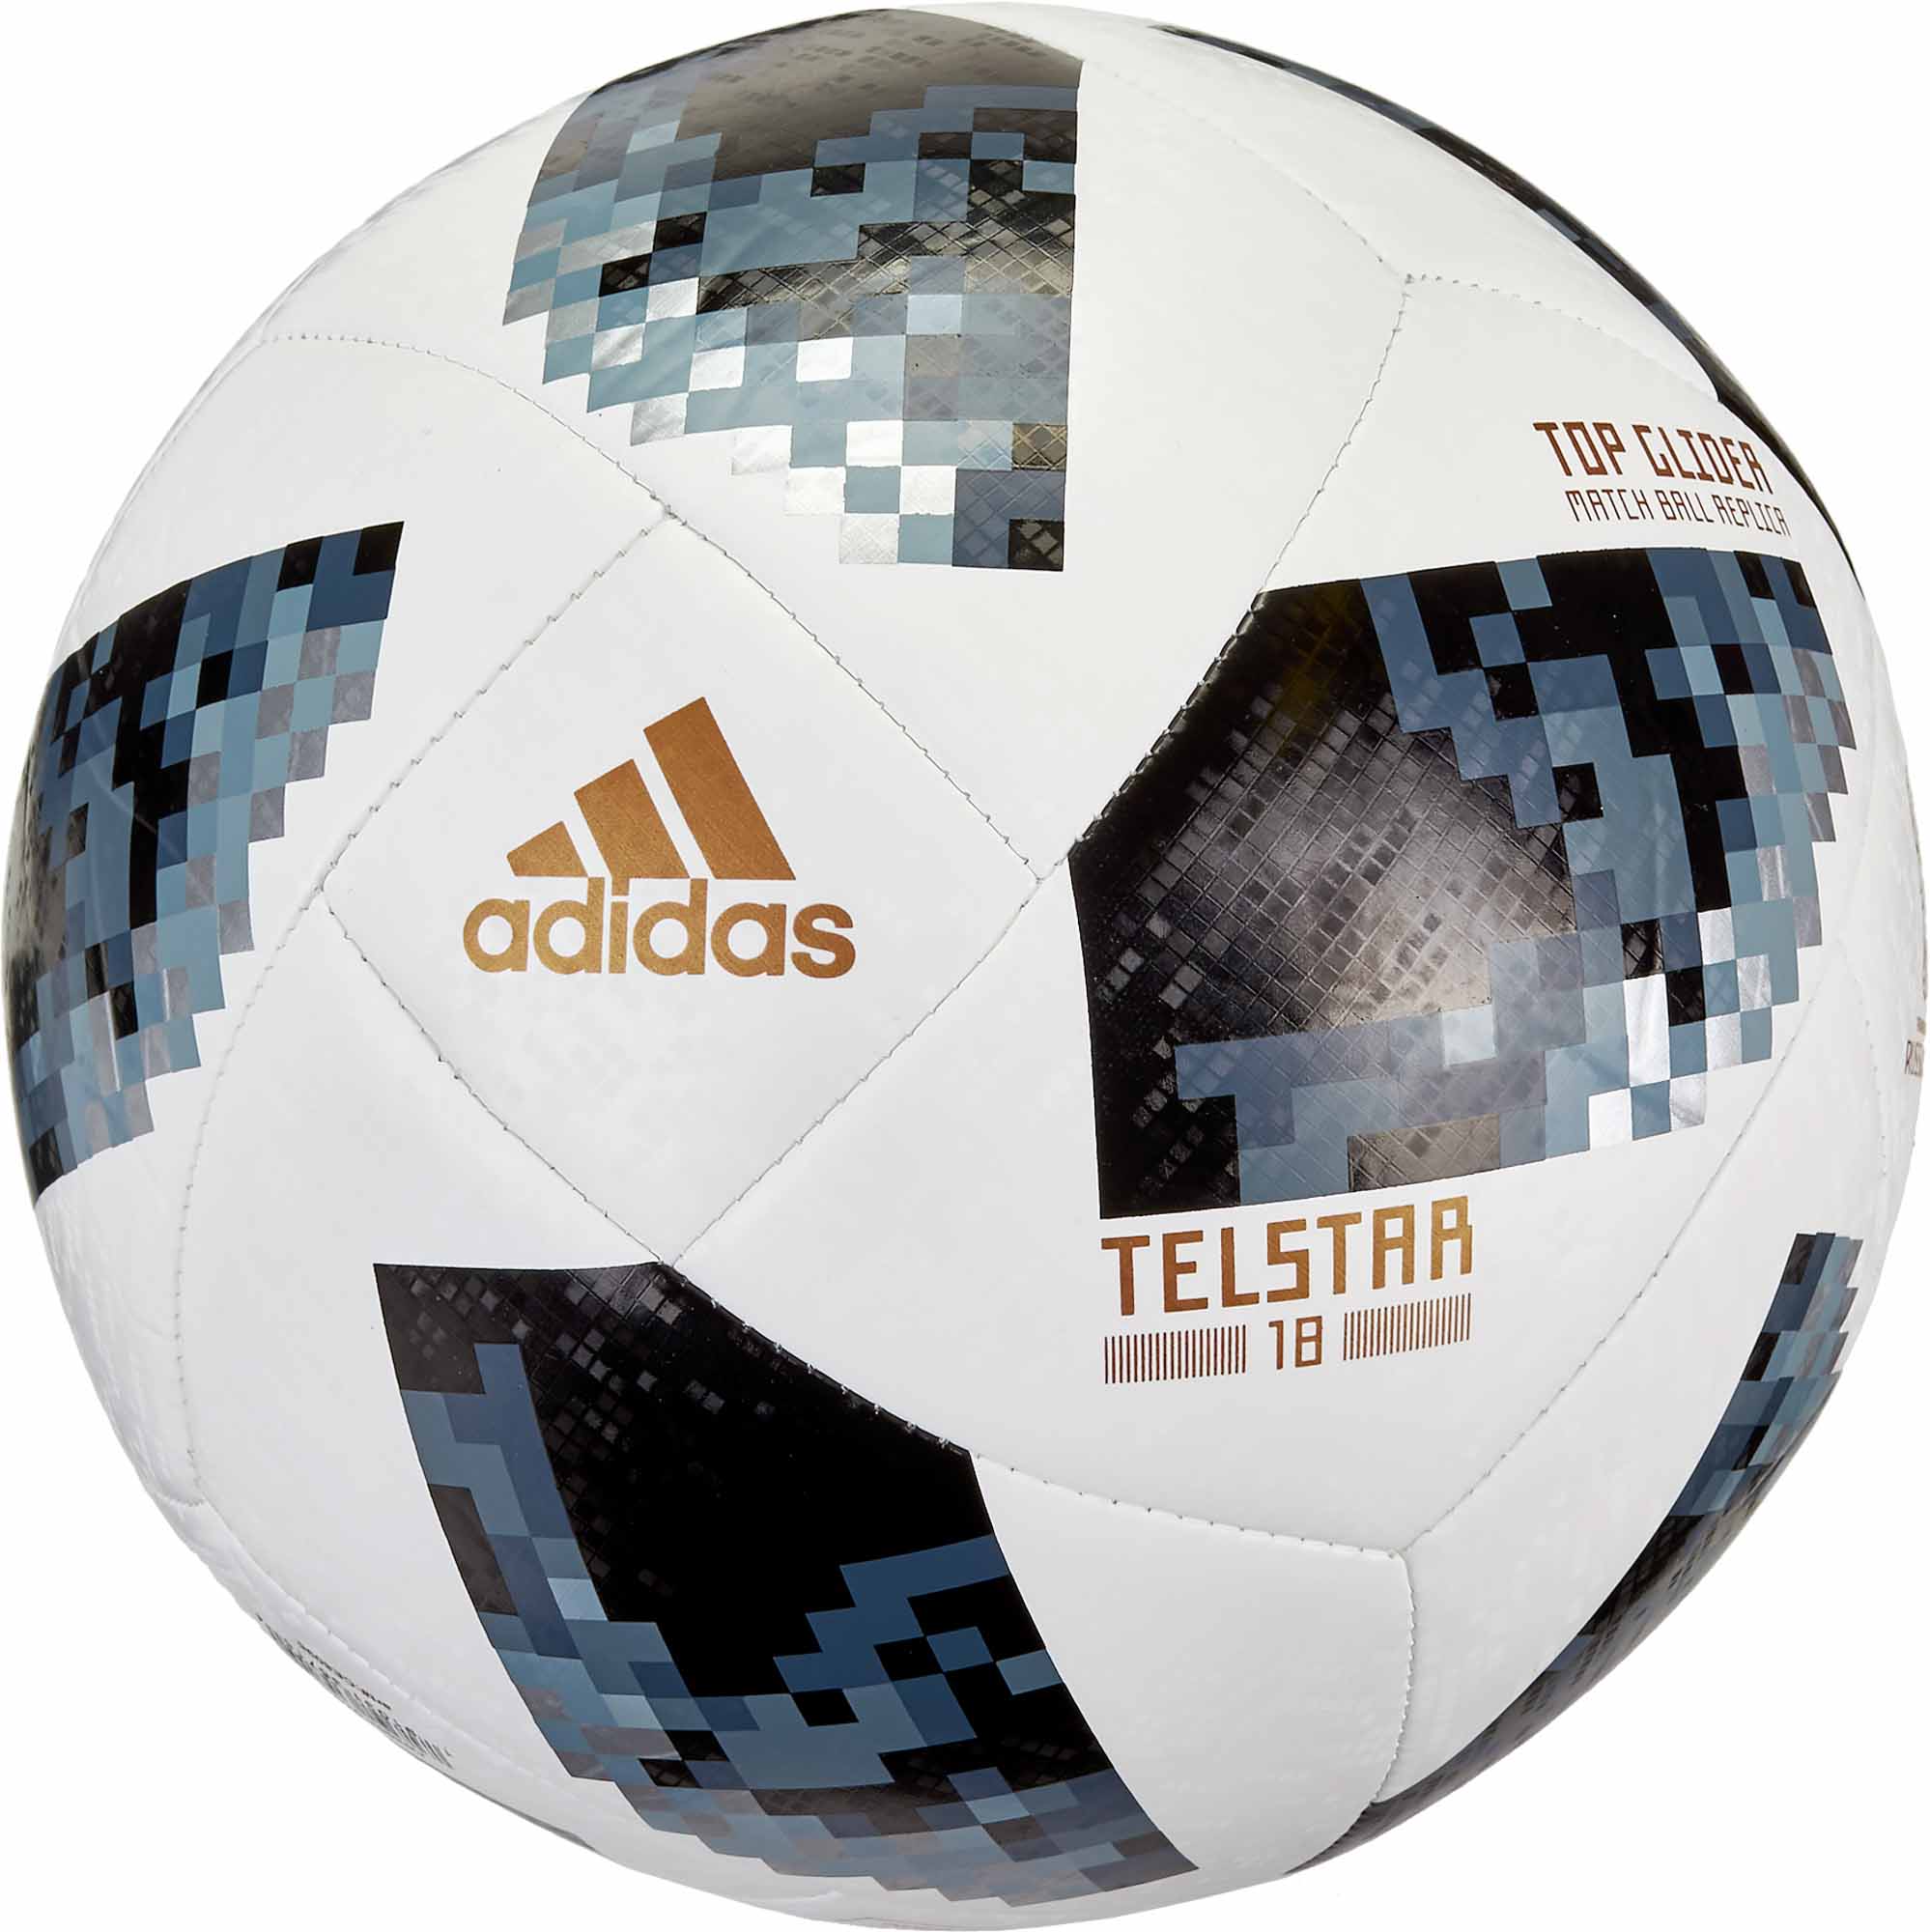 adidas world cup match ball